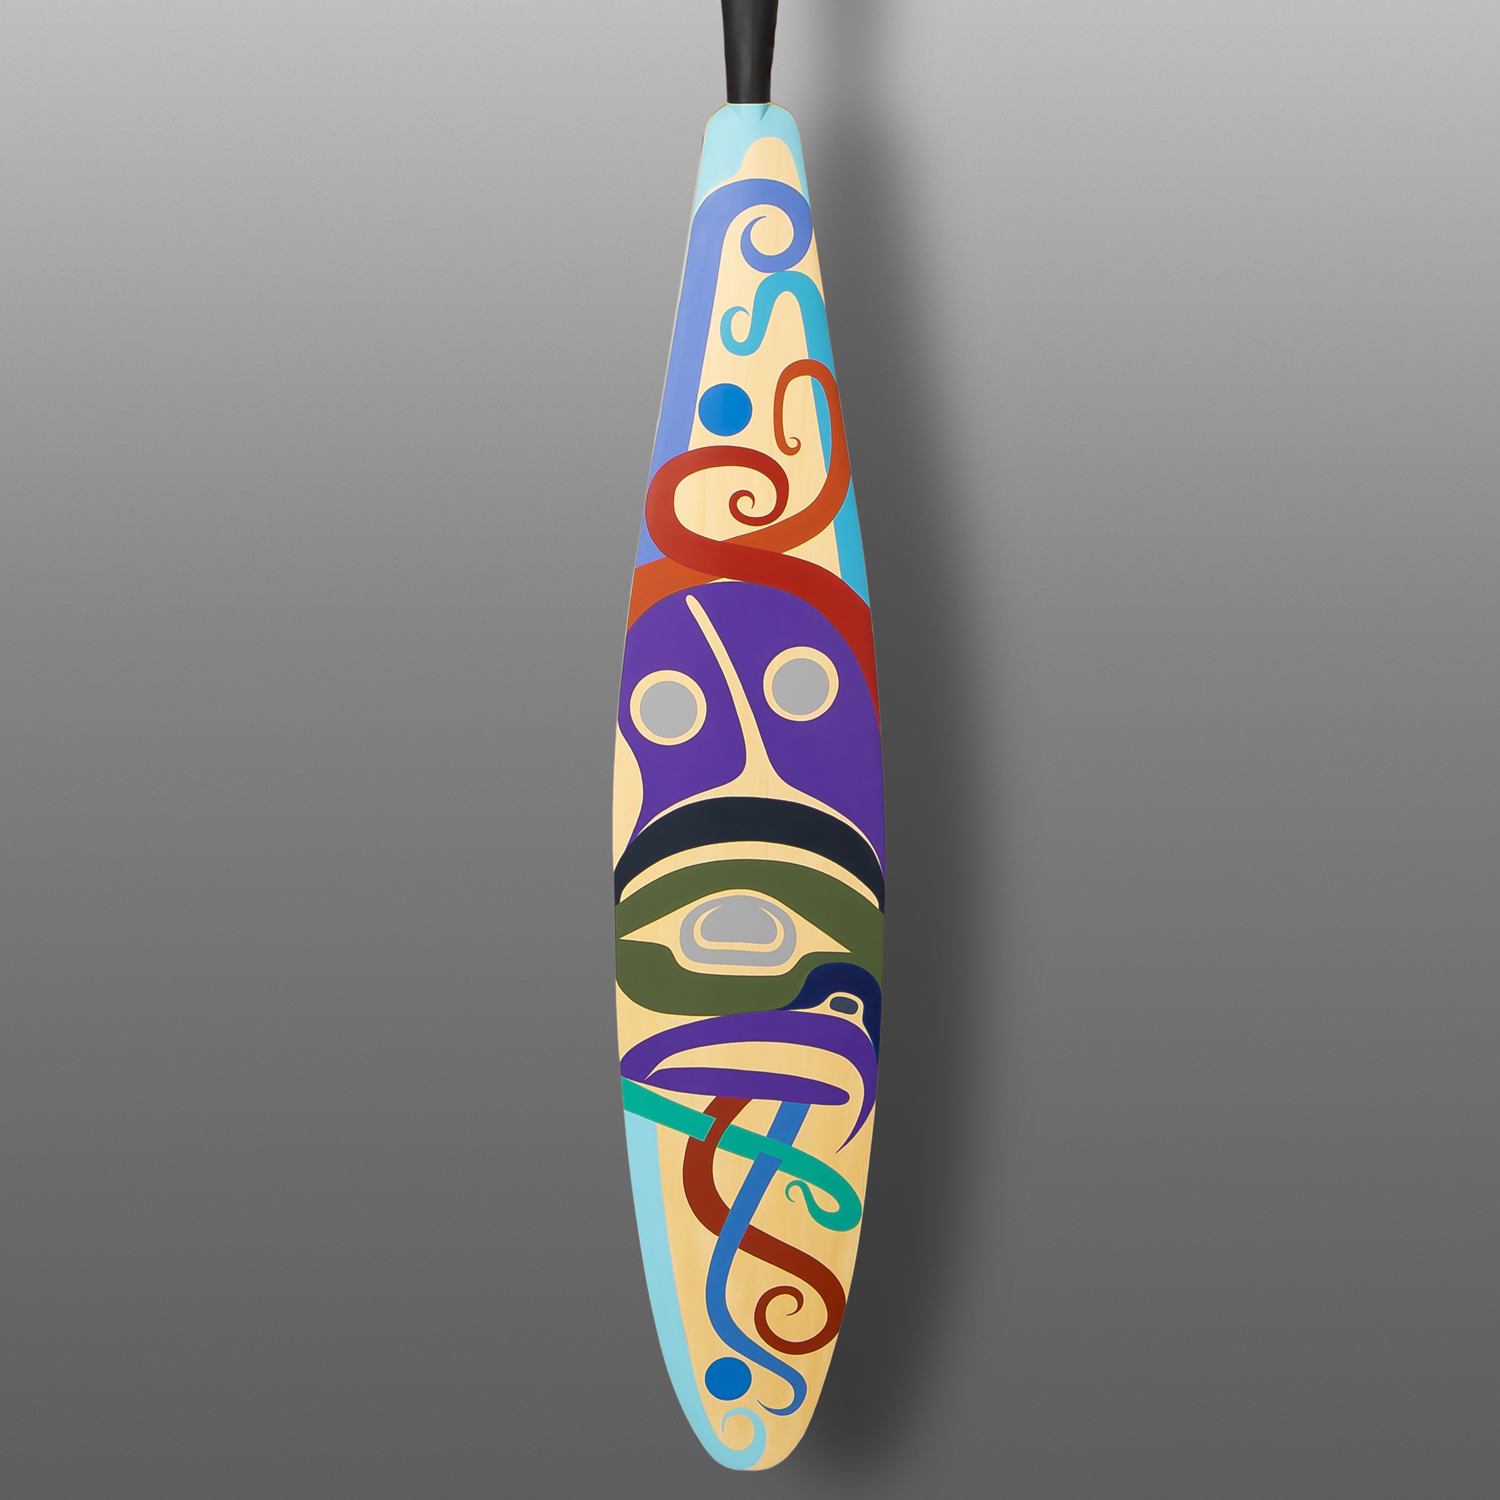 The Clever Ones (Octopus) Paddle Steve Smith - Dla'kwagila
OweekenoYellow cedar, paint
62½” x 7” x 1½”$8800